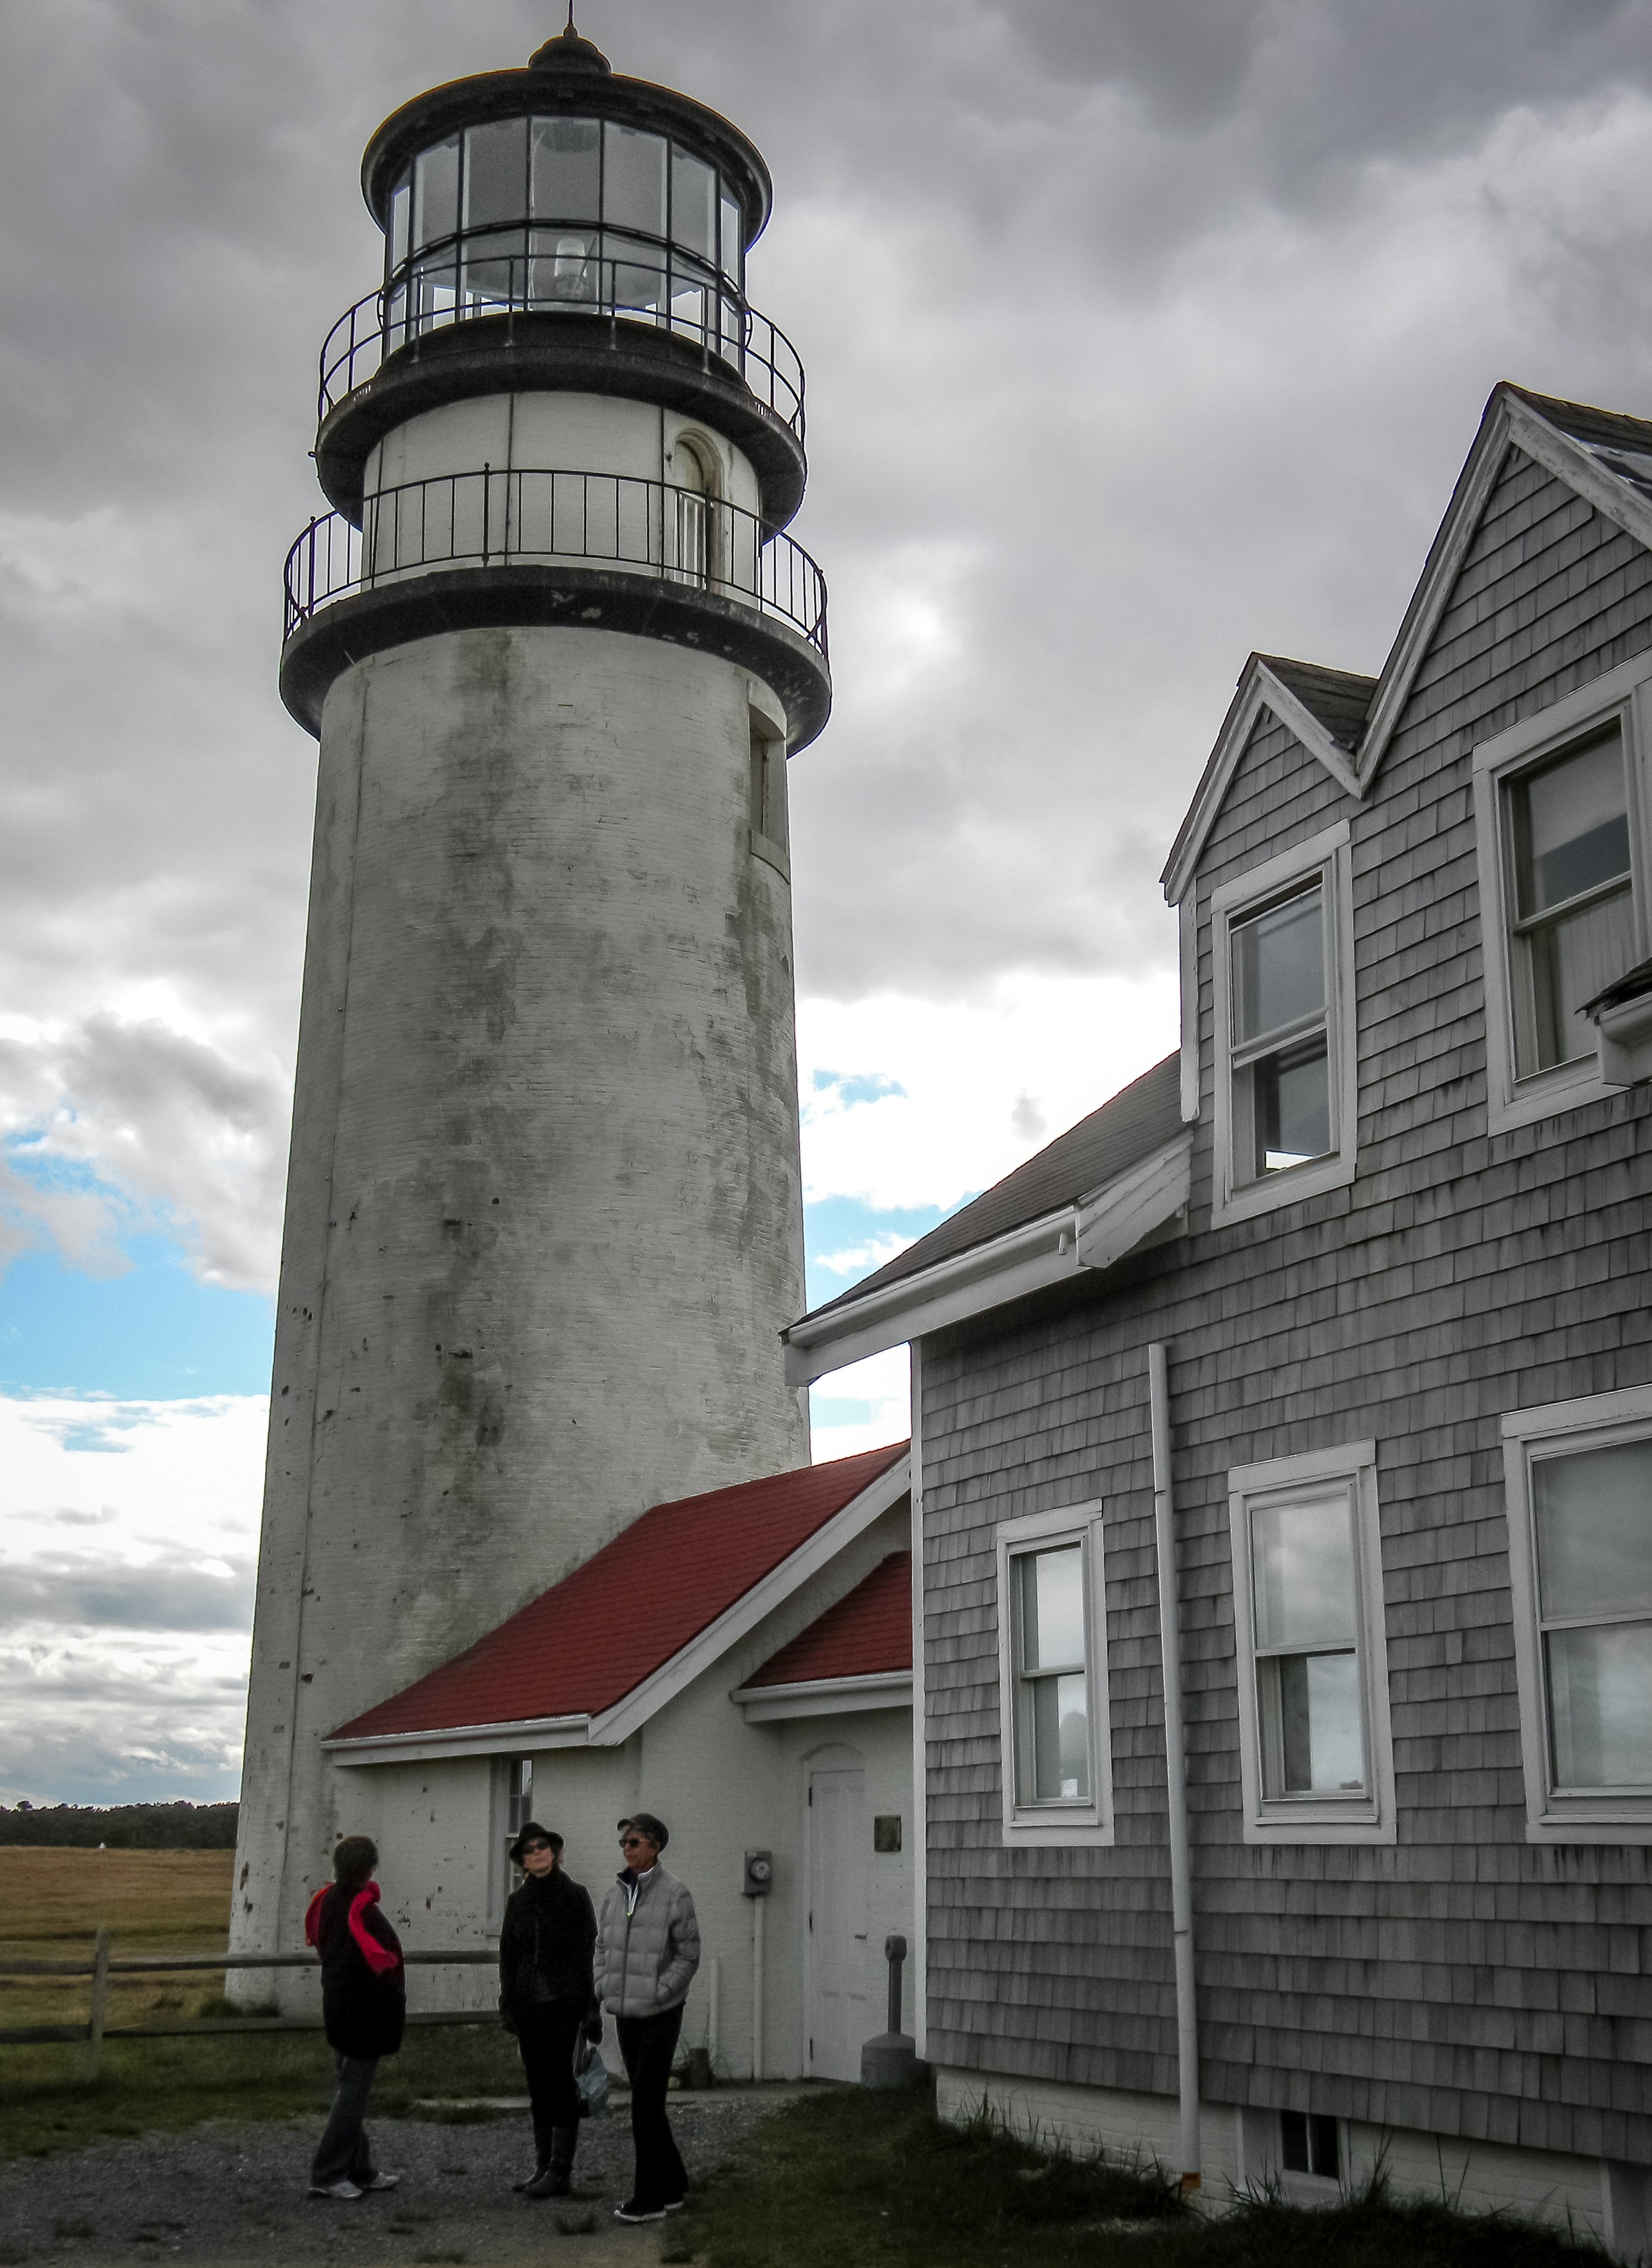 Highland Lighthouse - Truro, MA